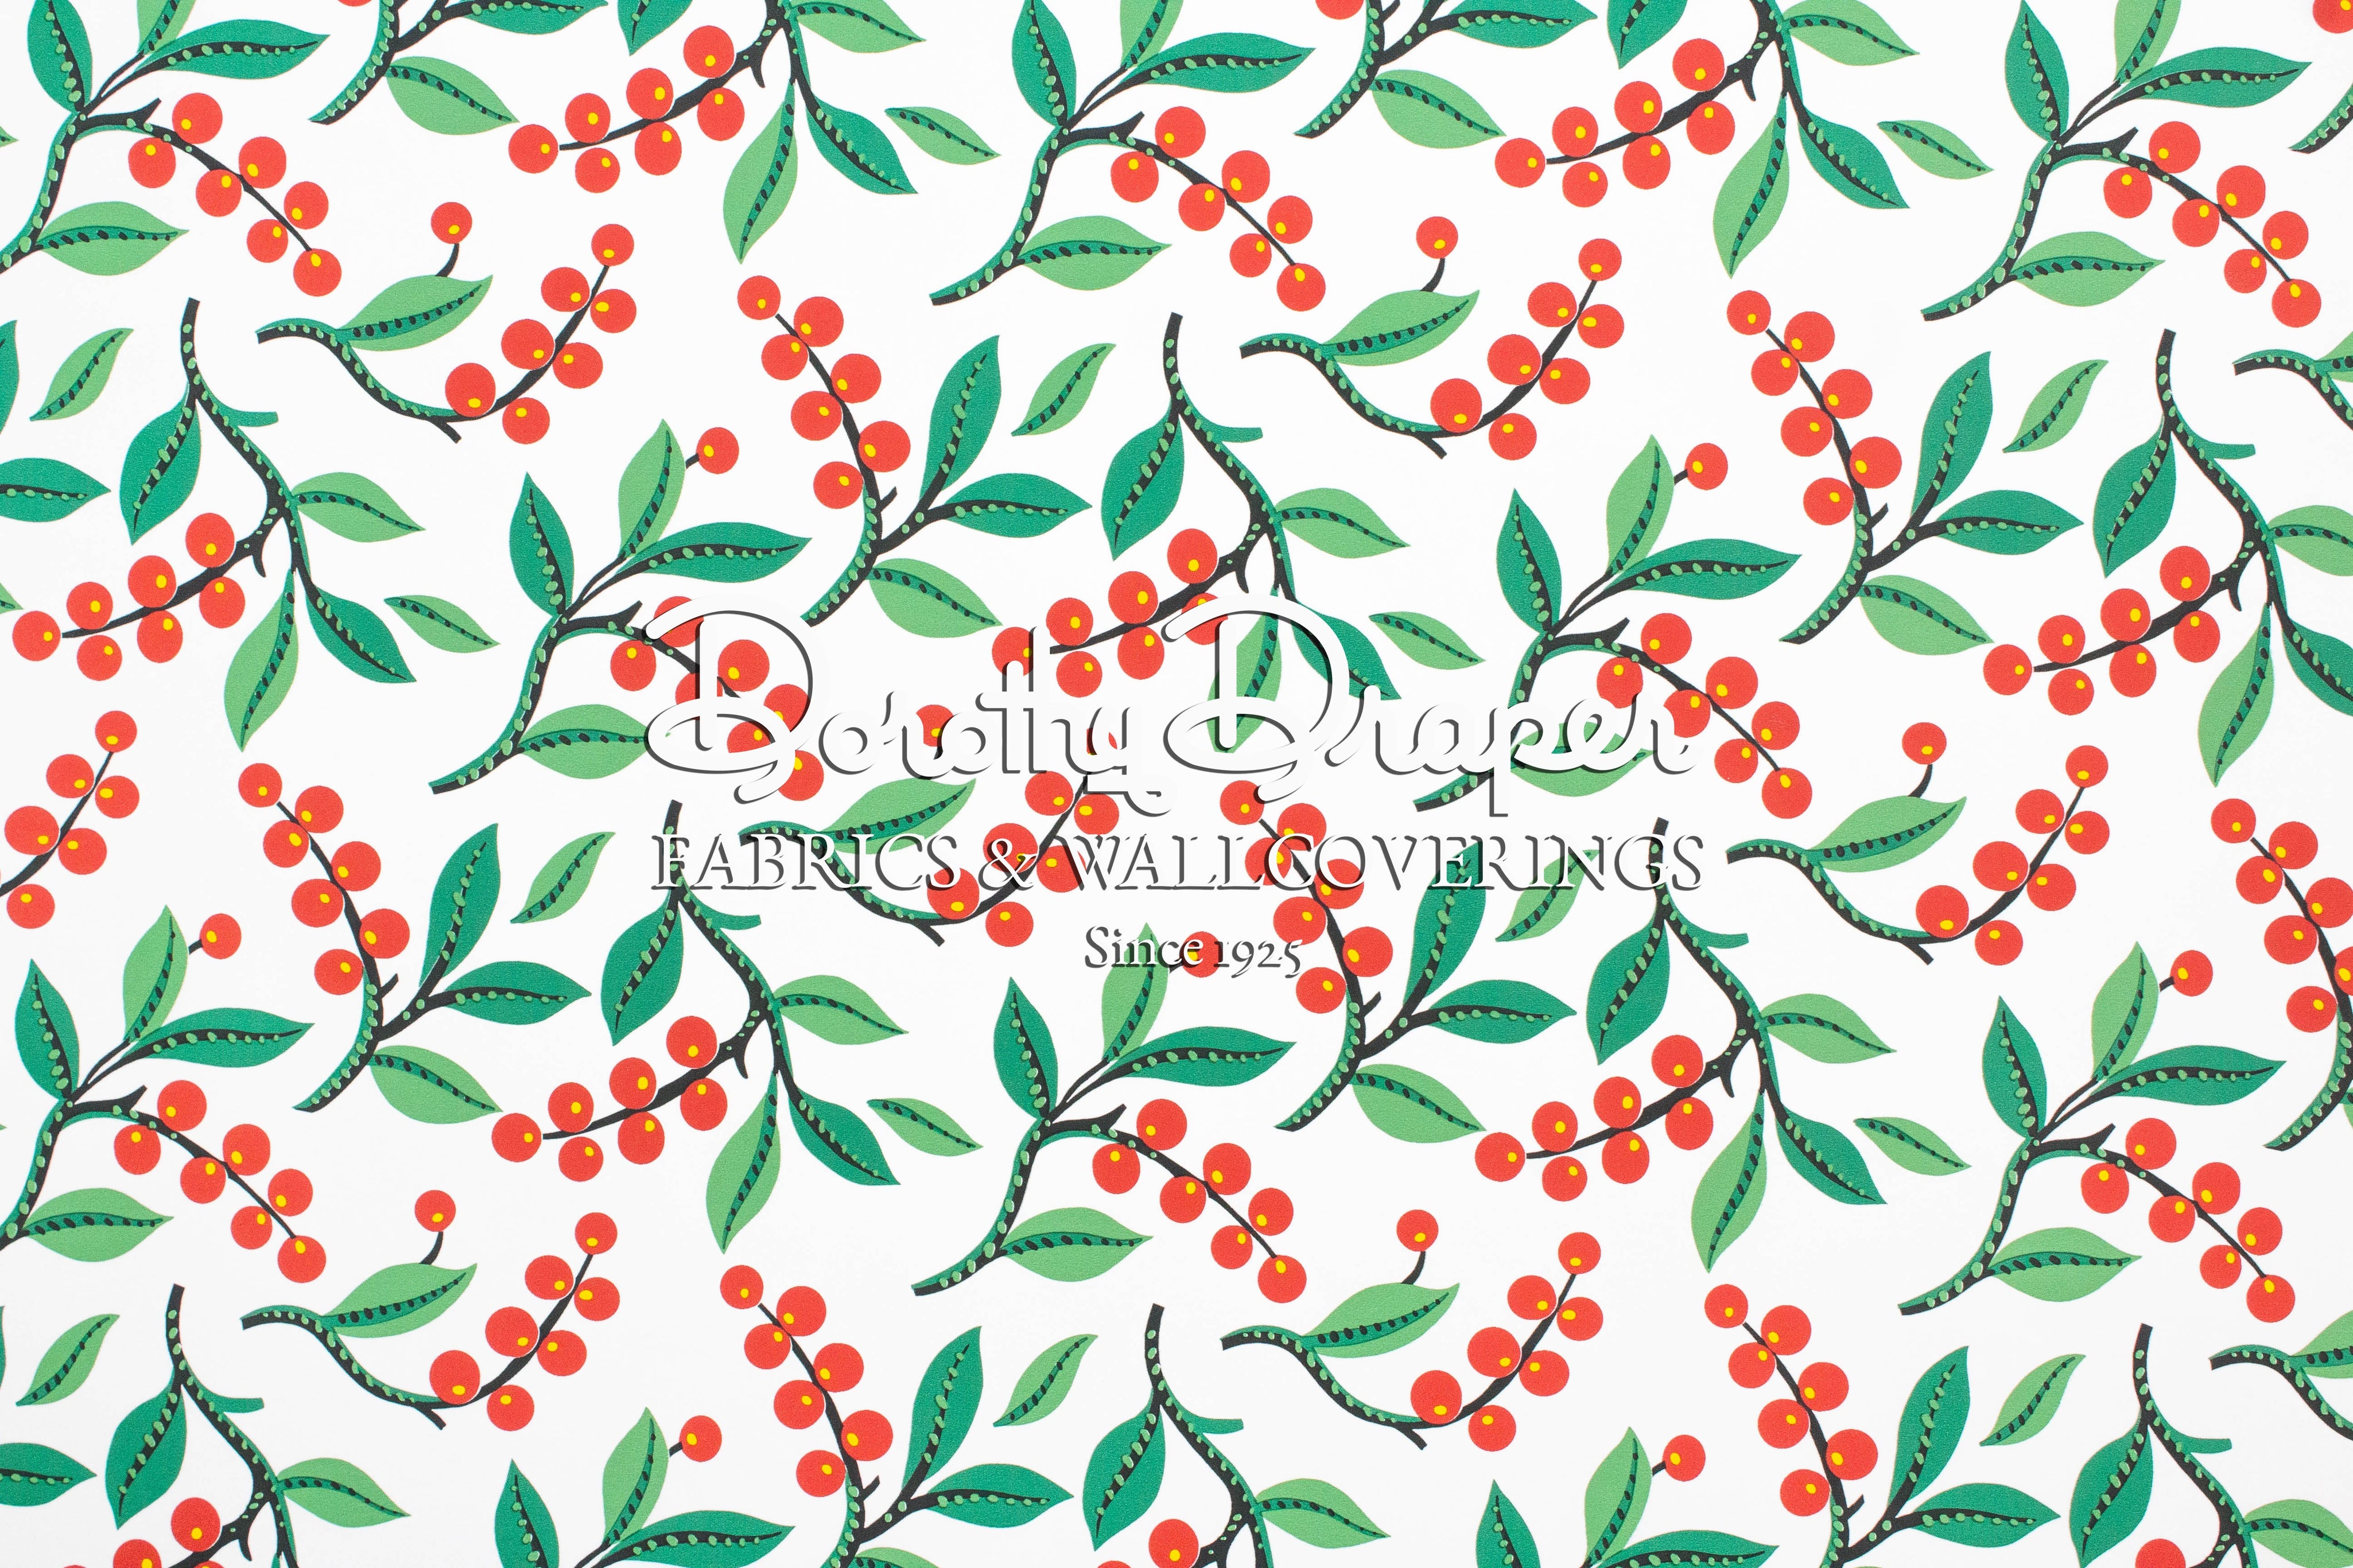 kates-mountain-berries-_greenandred_-wallpaper_2.jpg